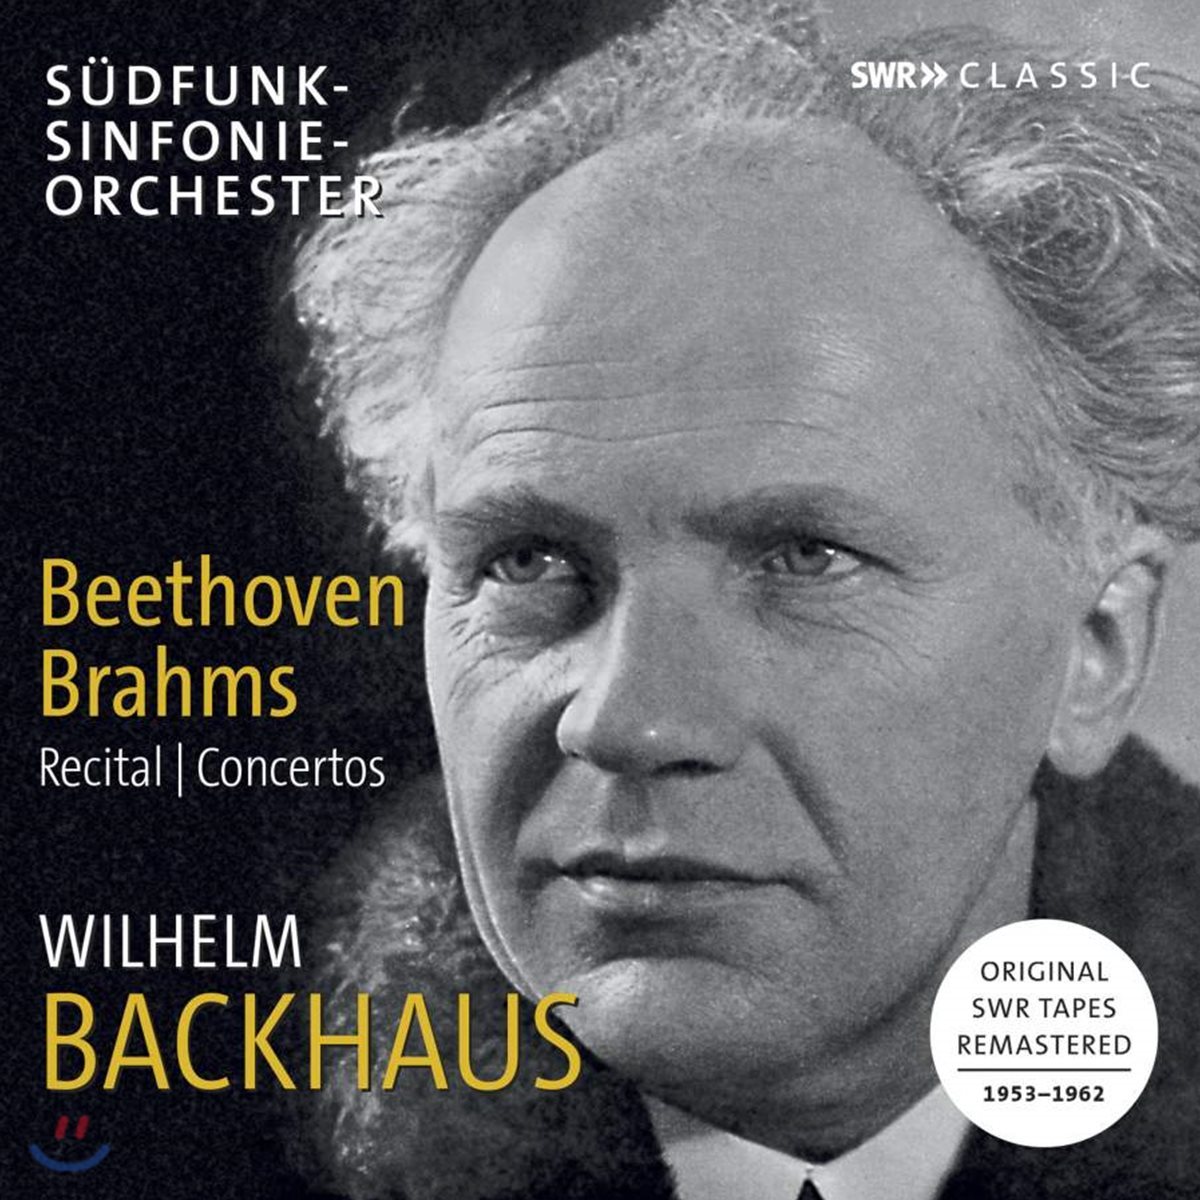 Wilhelm Backhaus 베토벤: 피아노 소나타 3번 21번 `발트슈타인` 29번 `함머클라이버`  협주곡 5번 `황제` / 브람스: 협주곡 2번, 왈츠 